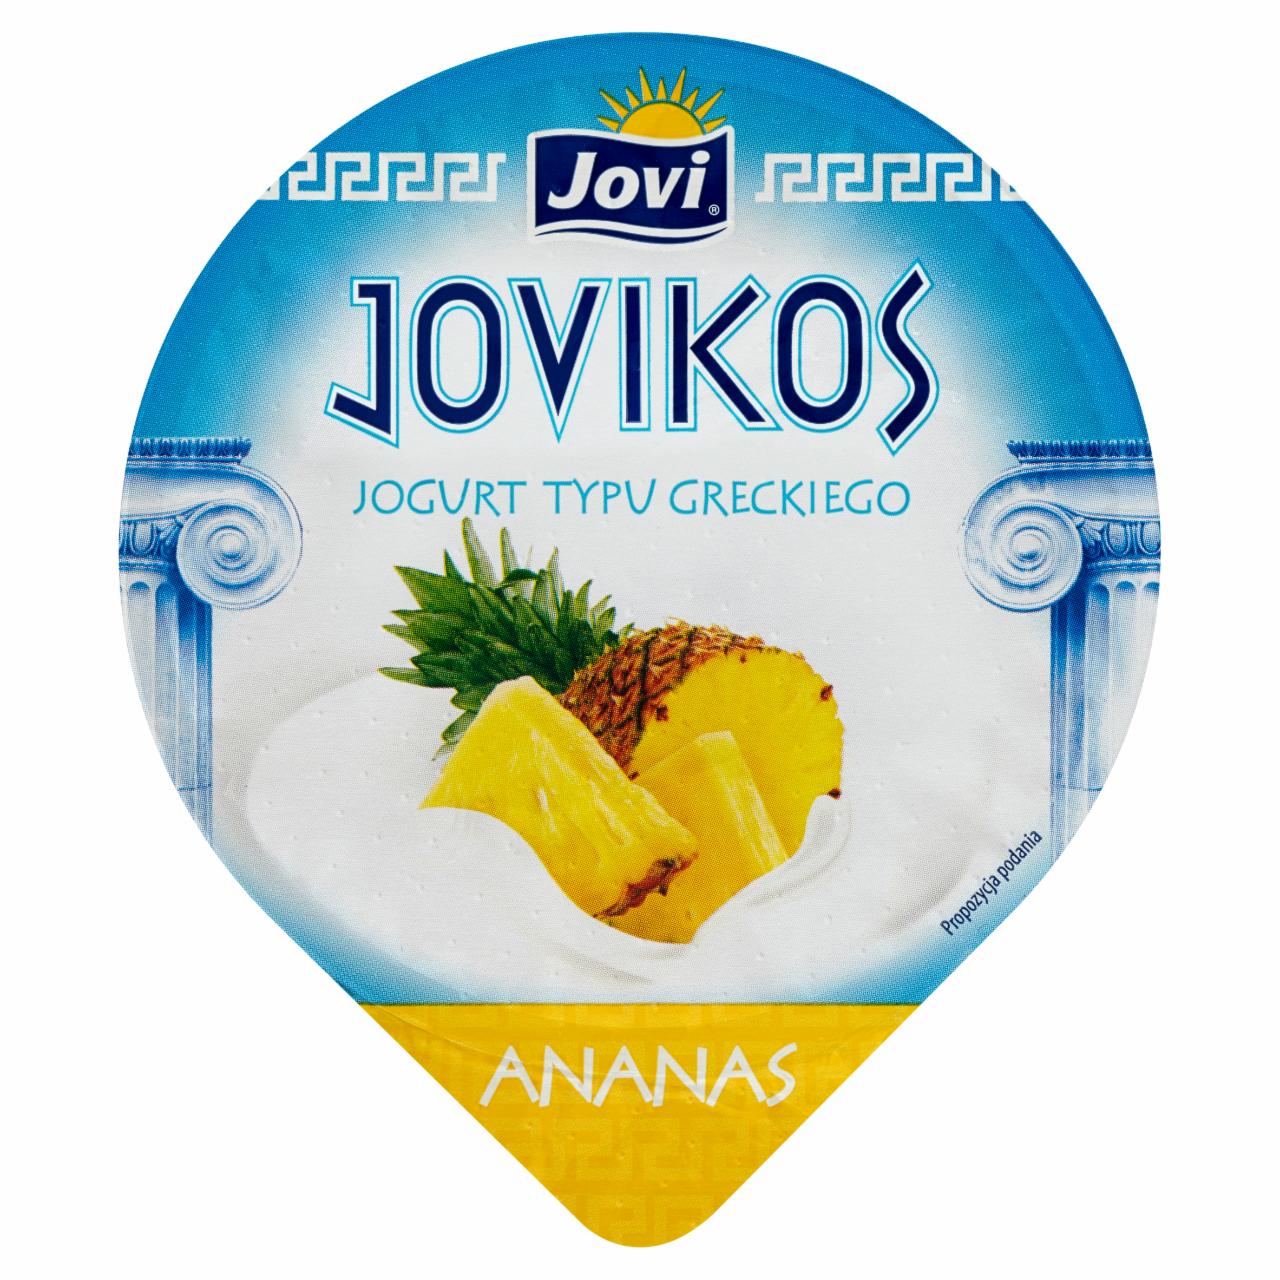 Zdjęcia - Jovi Jovikos Jogurt typu greckiego ananas 150 g